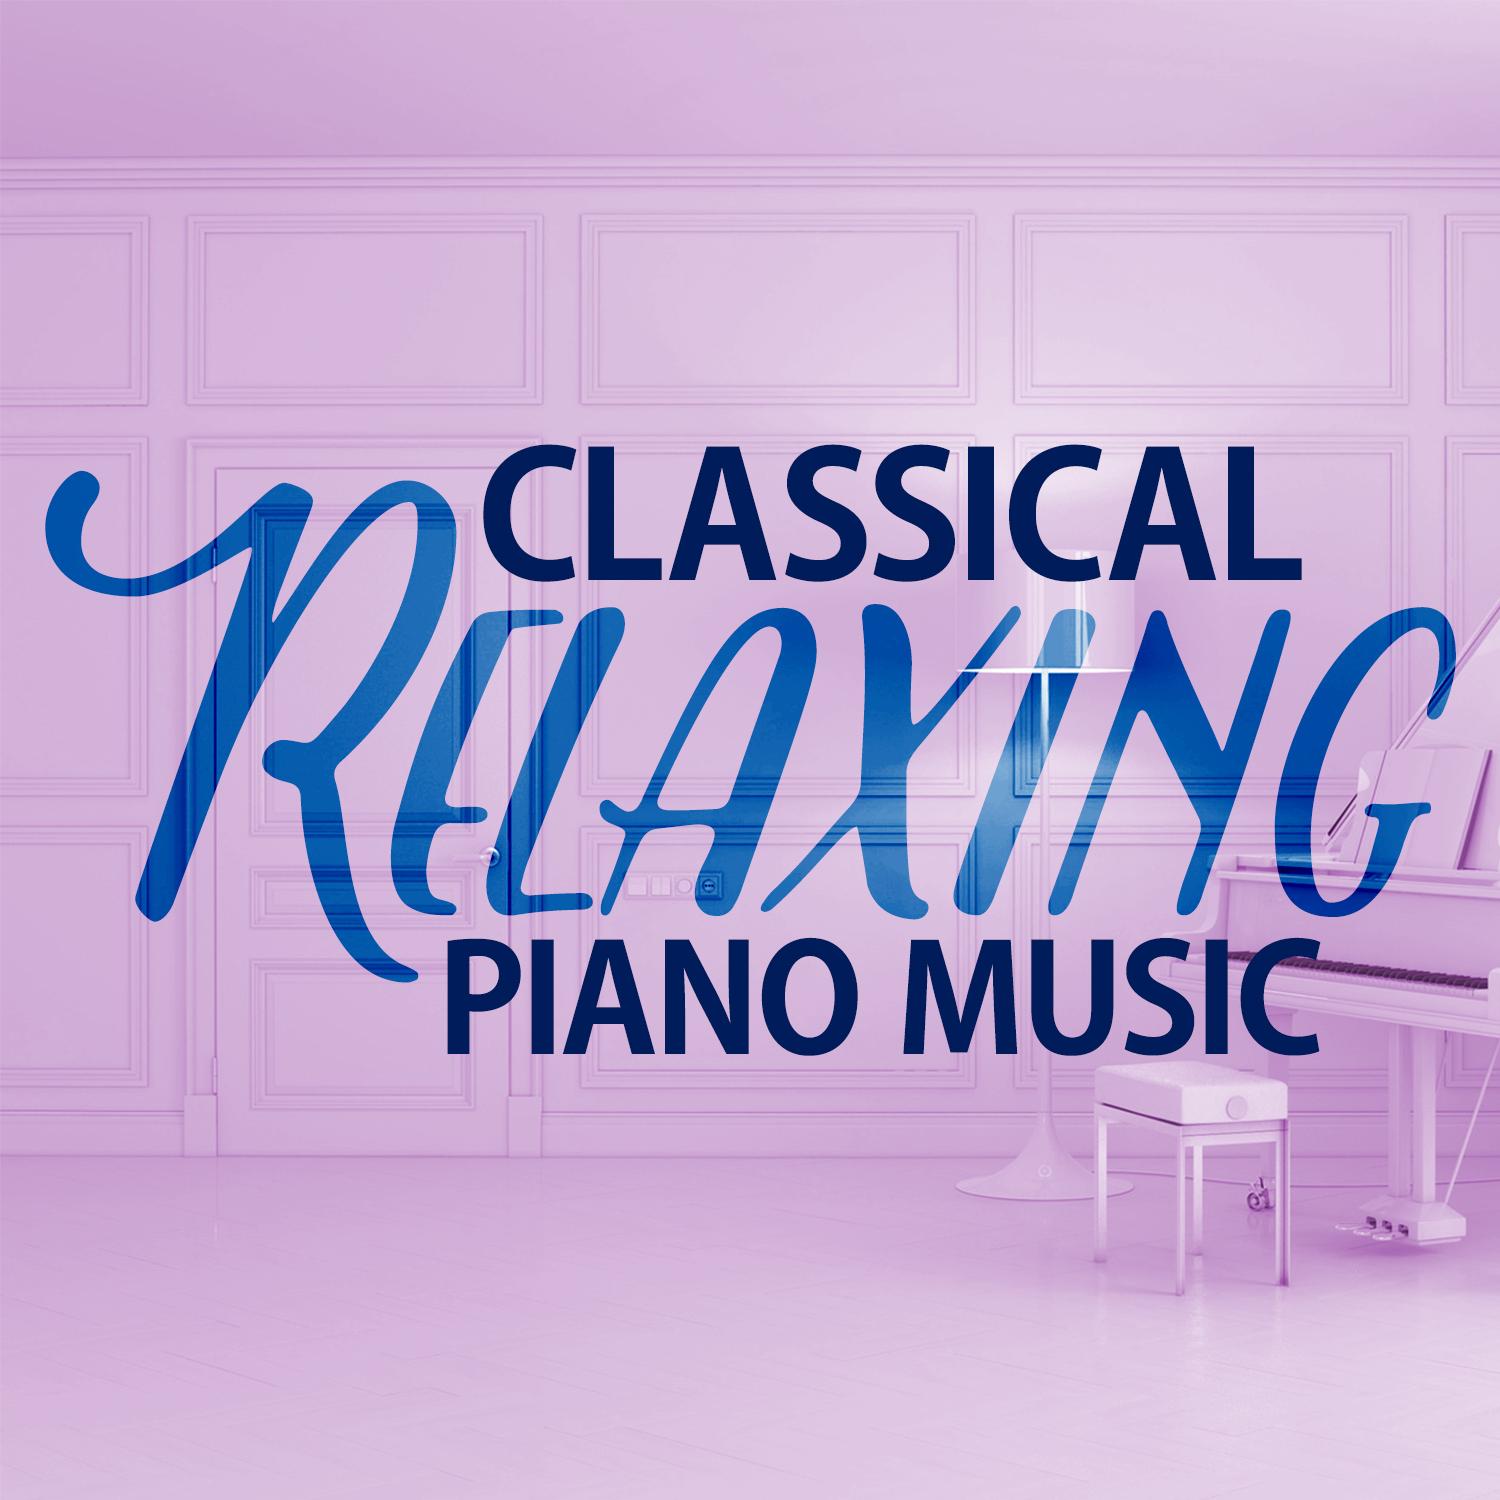 Classical Relaxing Piano Music